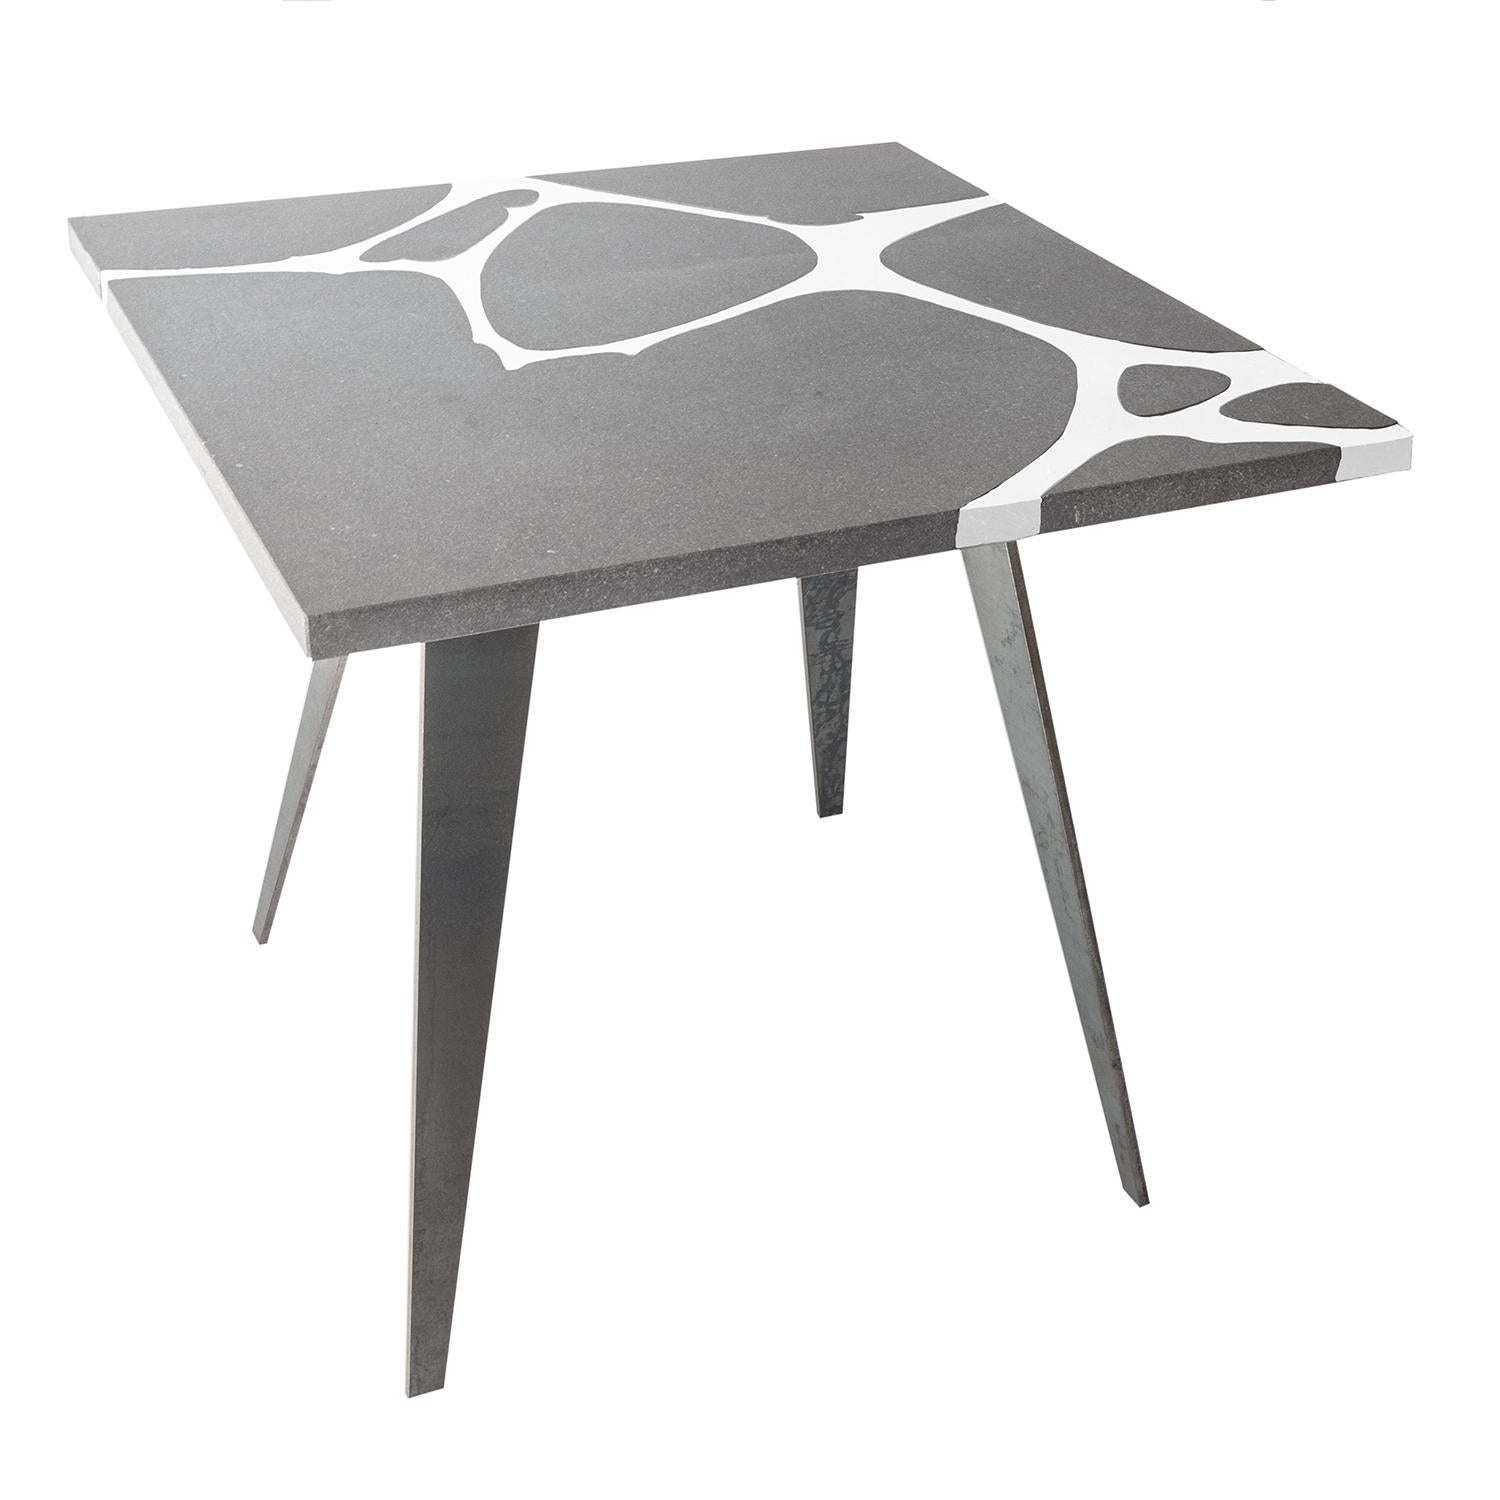 Italian Modern Outdoor Table in Lava Stone and Steel, Venturae v1 white, Filodifumo For Sale